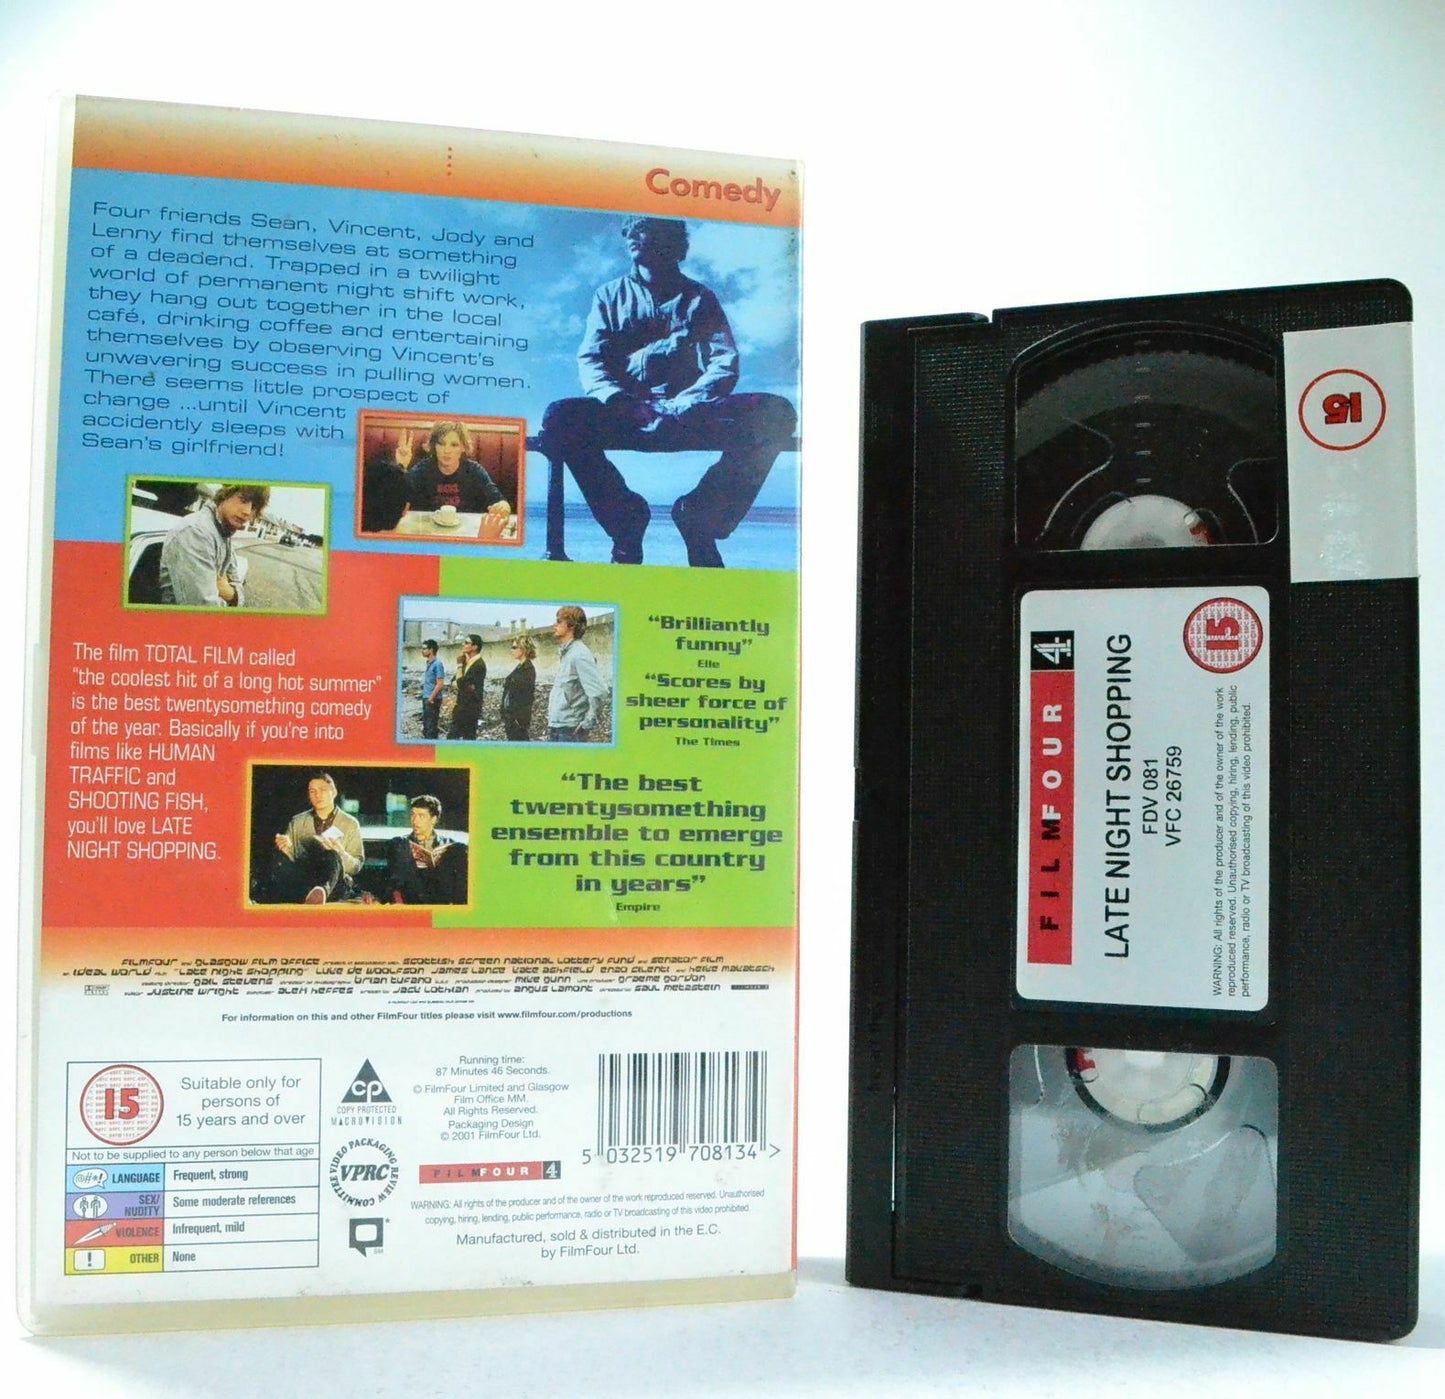 Late Night Shopping: (2001) Comedy - Large Box - James Lance/Kate Ashfield - VHS-